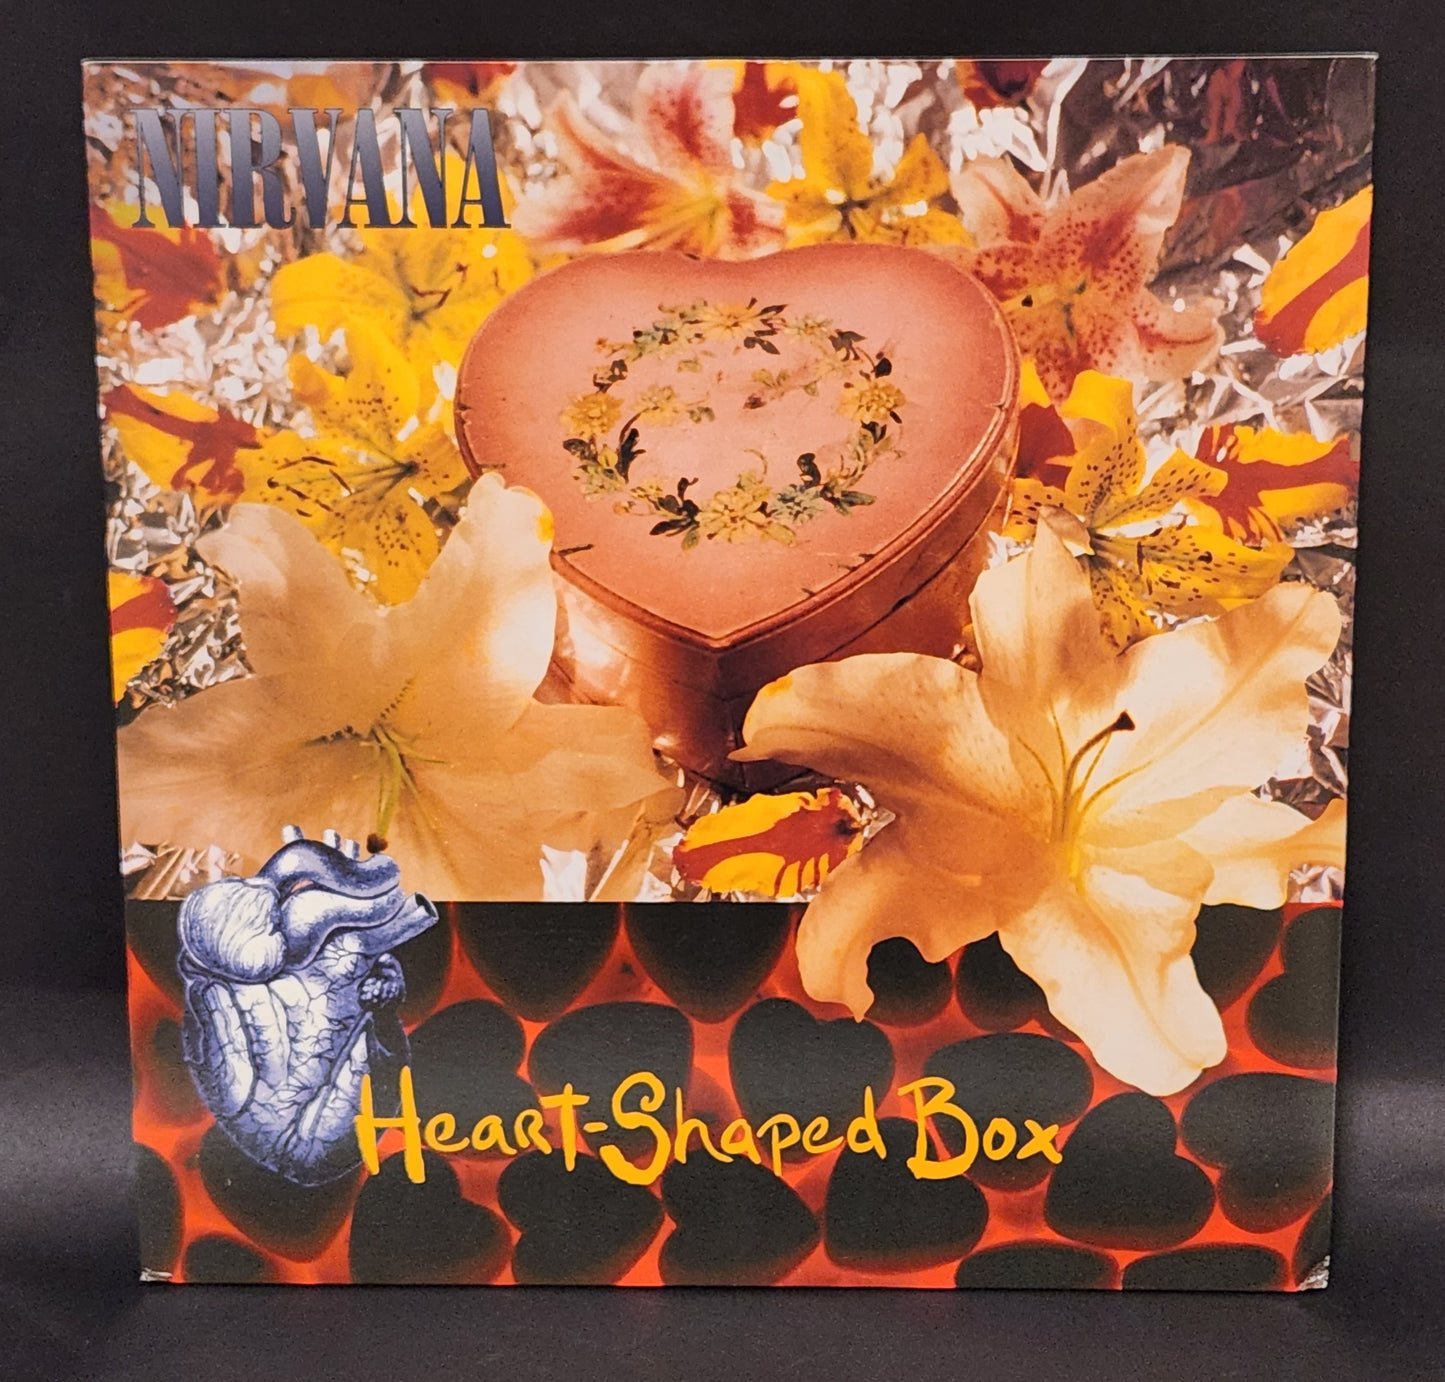 Nirvana "Heart-Shaped Box" 1993 Alt Rock Grunge Promo EP Record Album